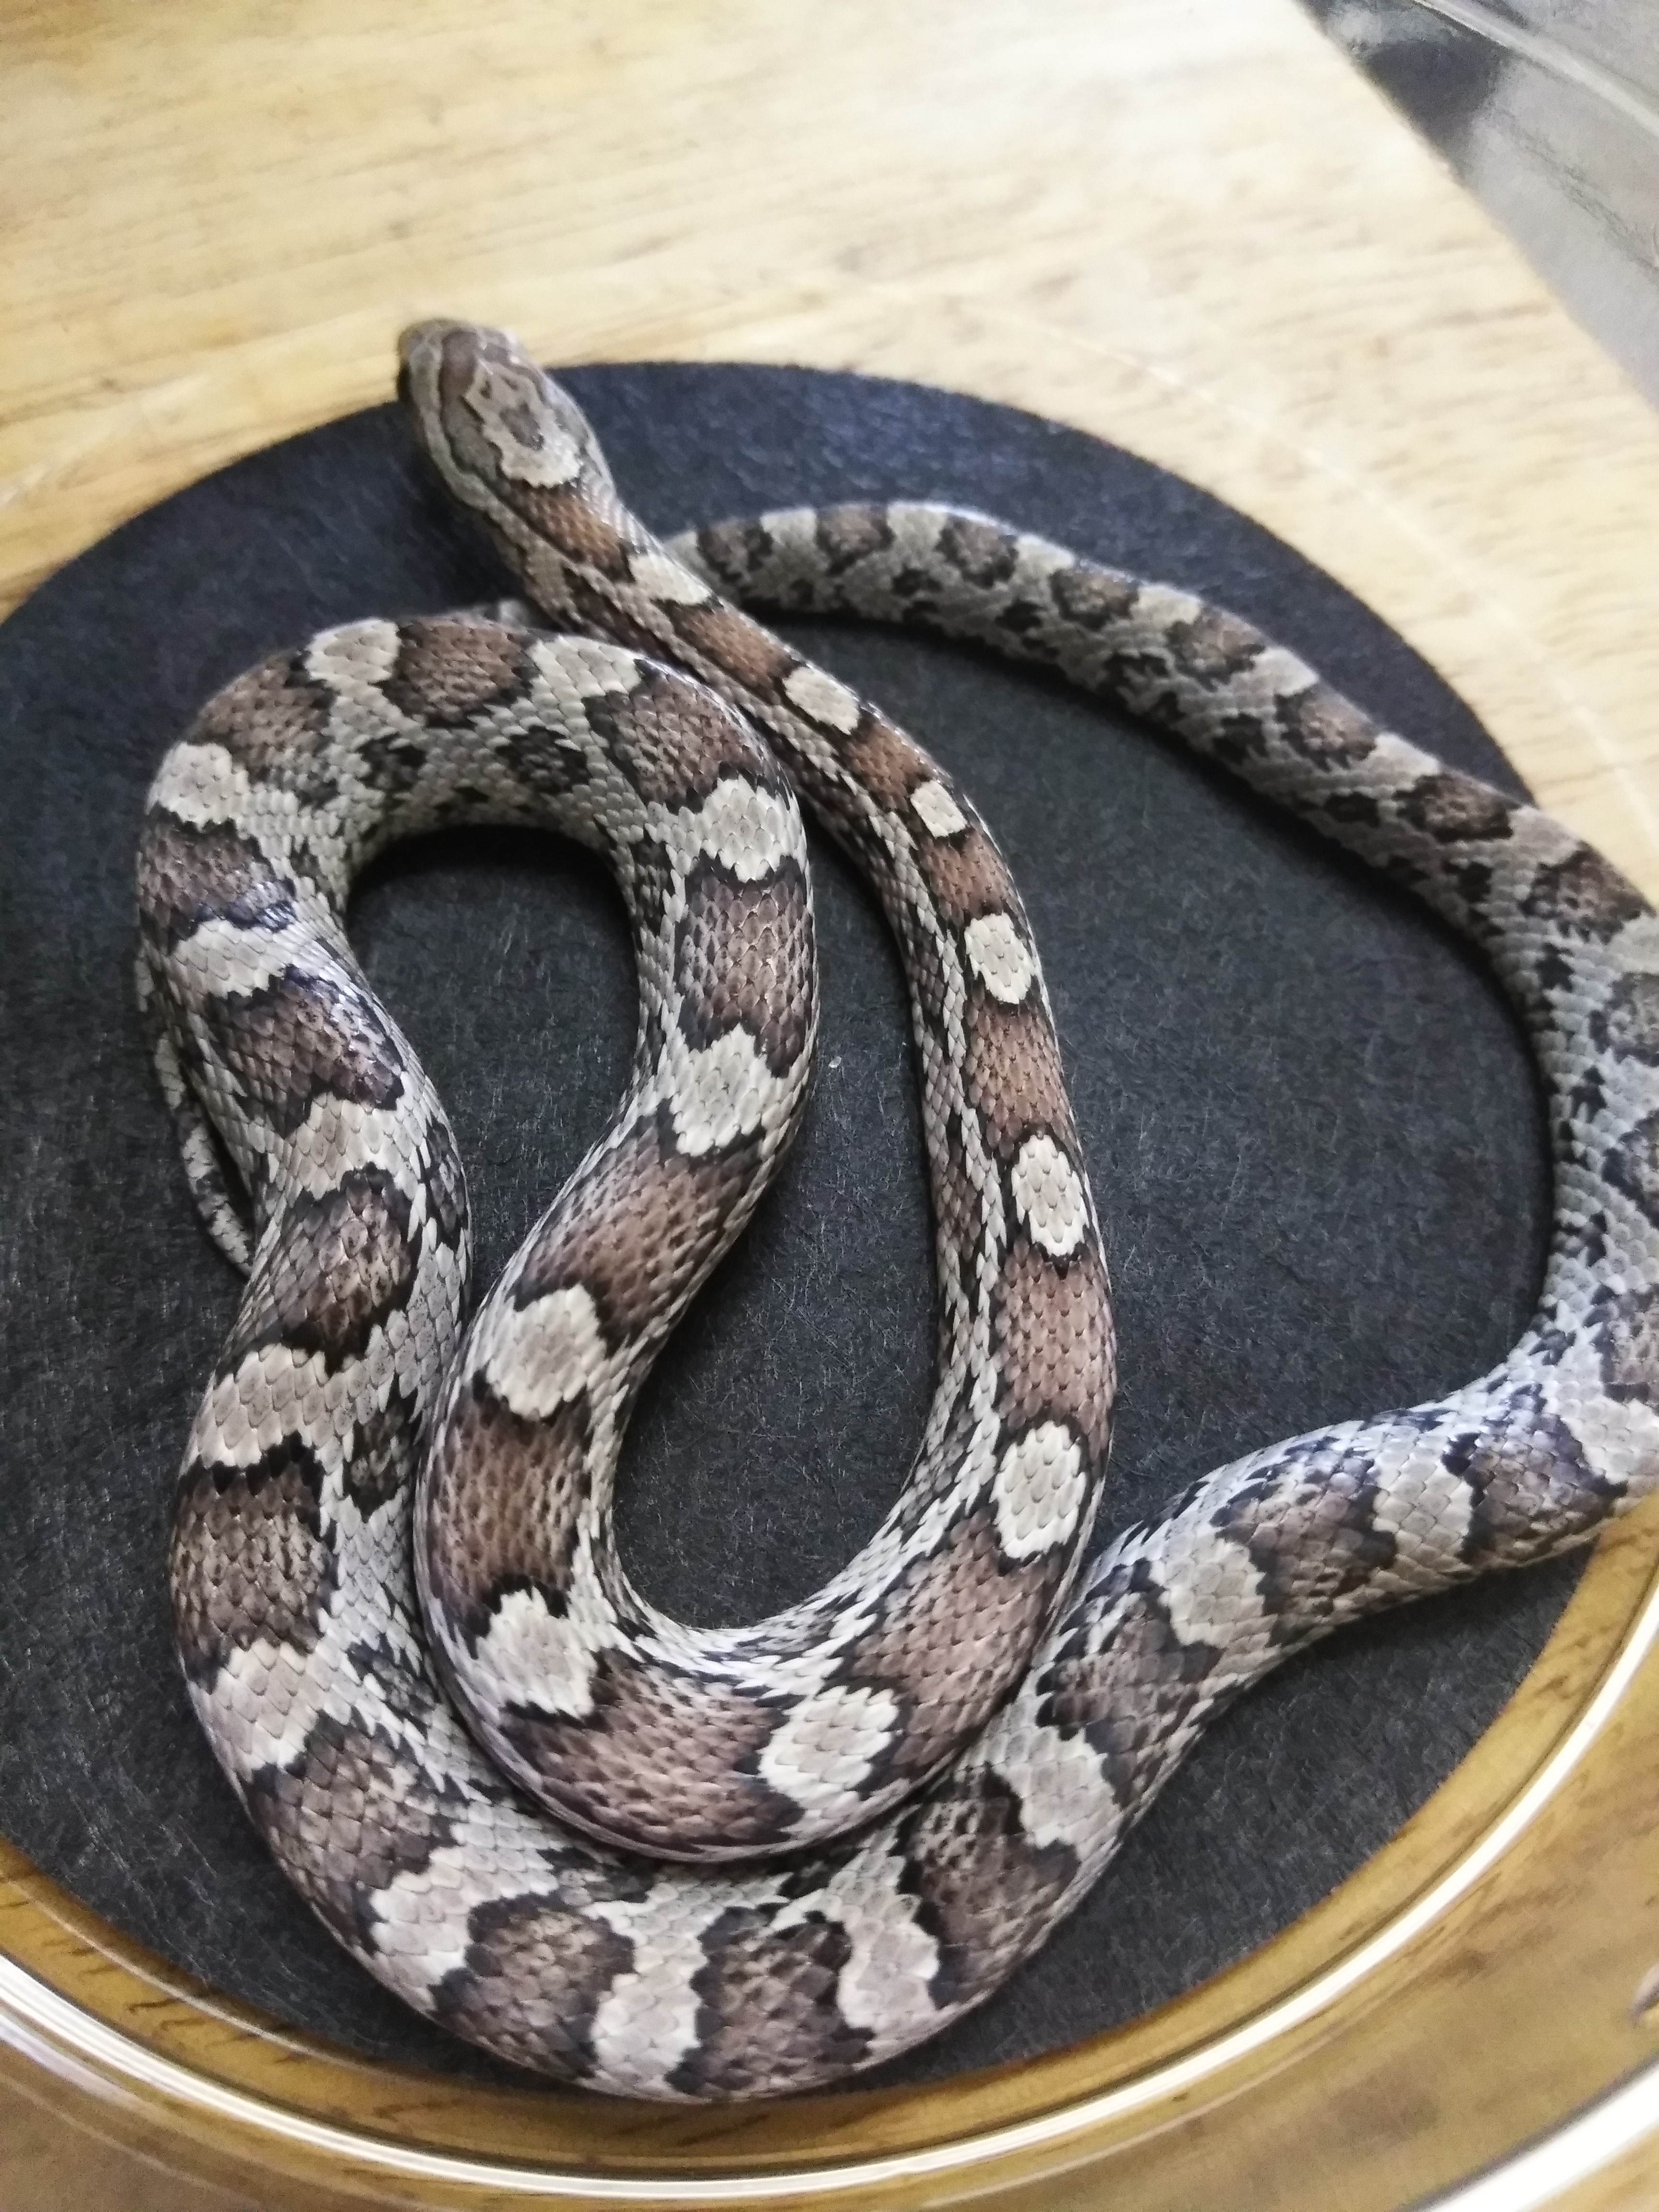 Anery Corn Snake by Blackheart Reptiles